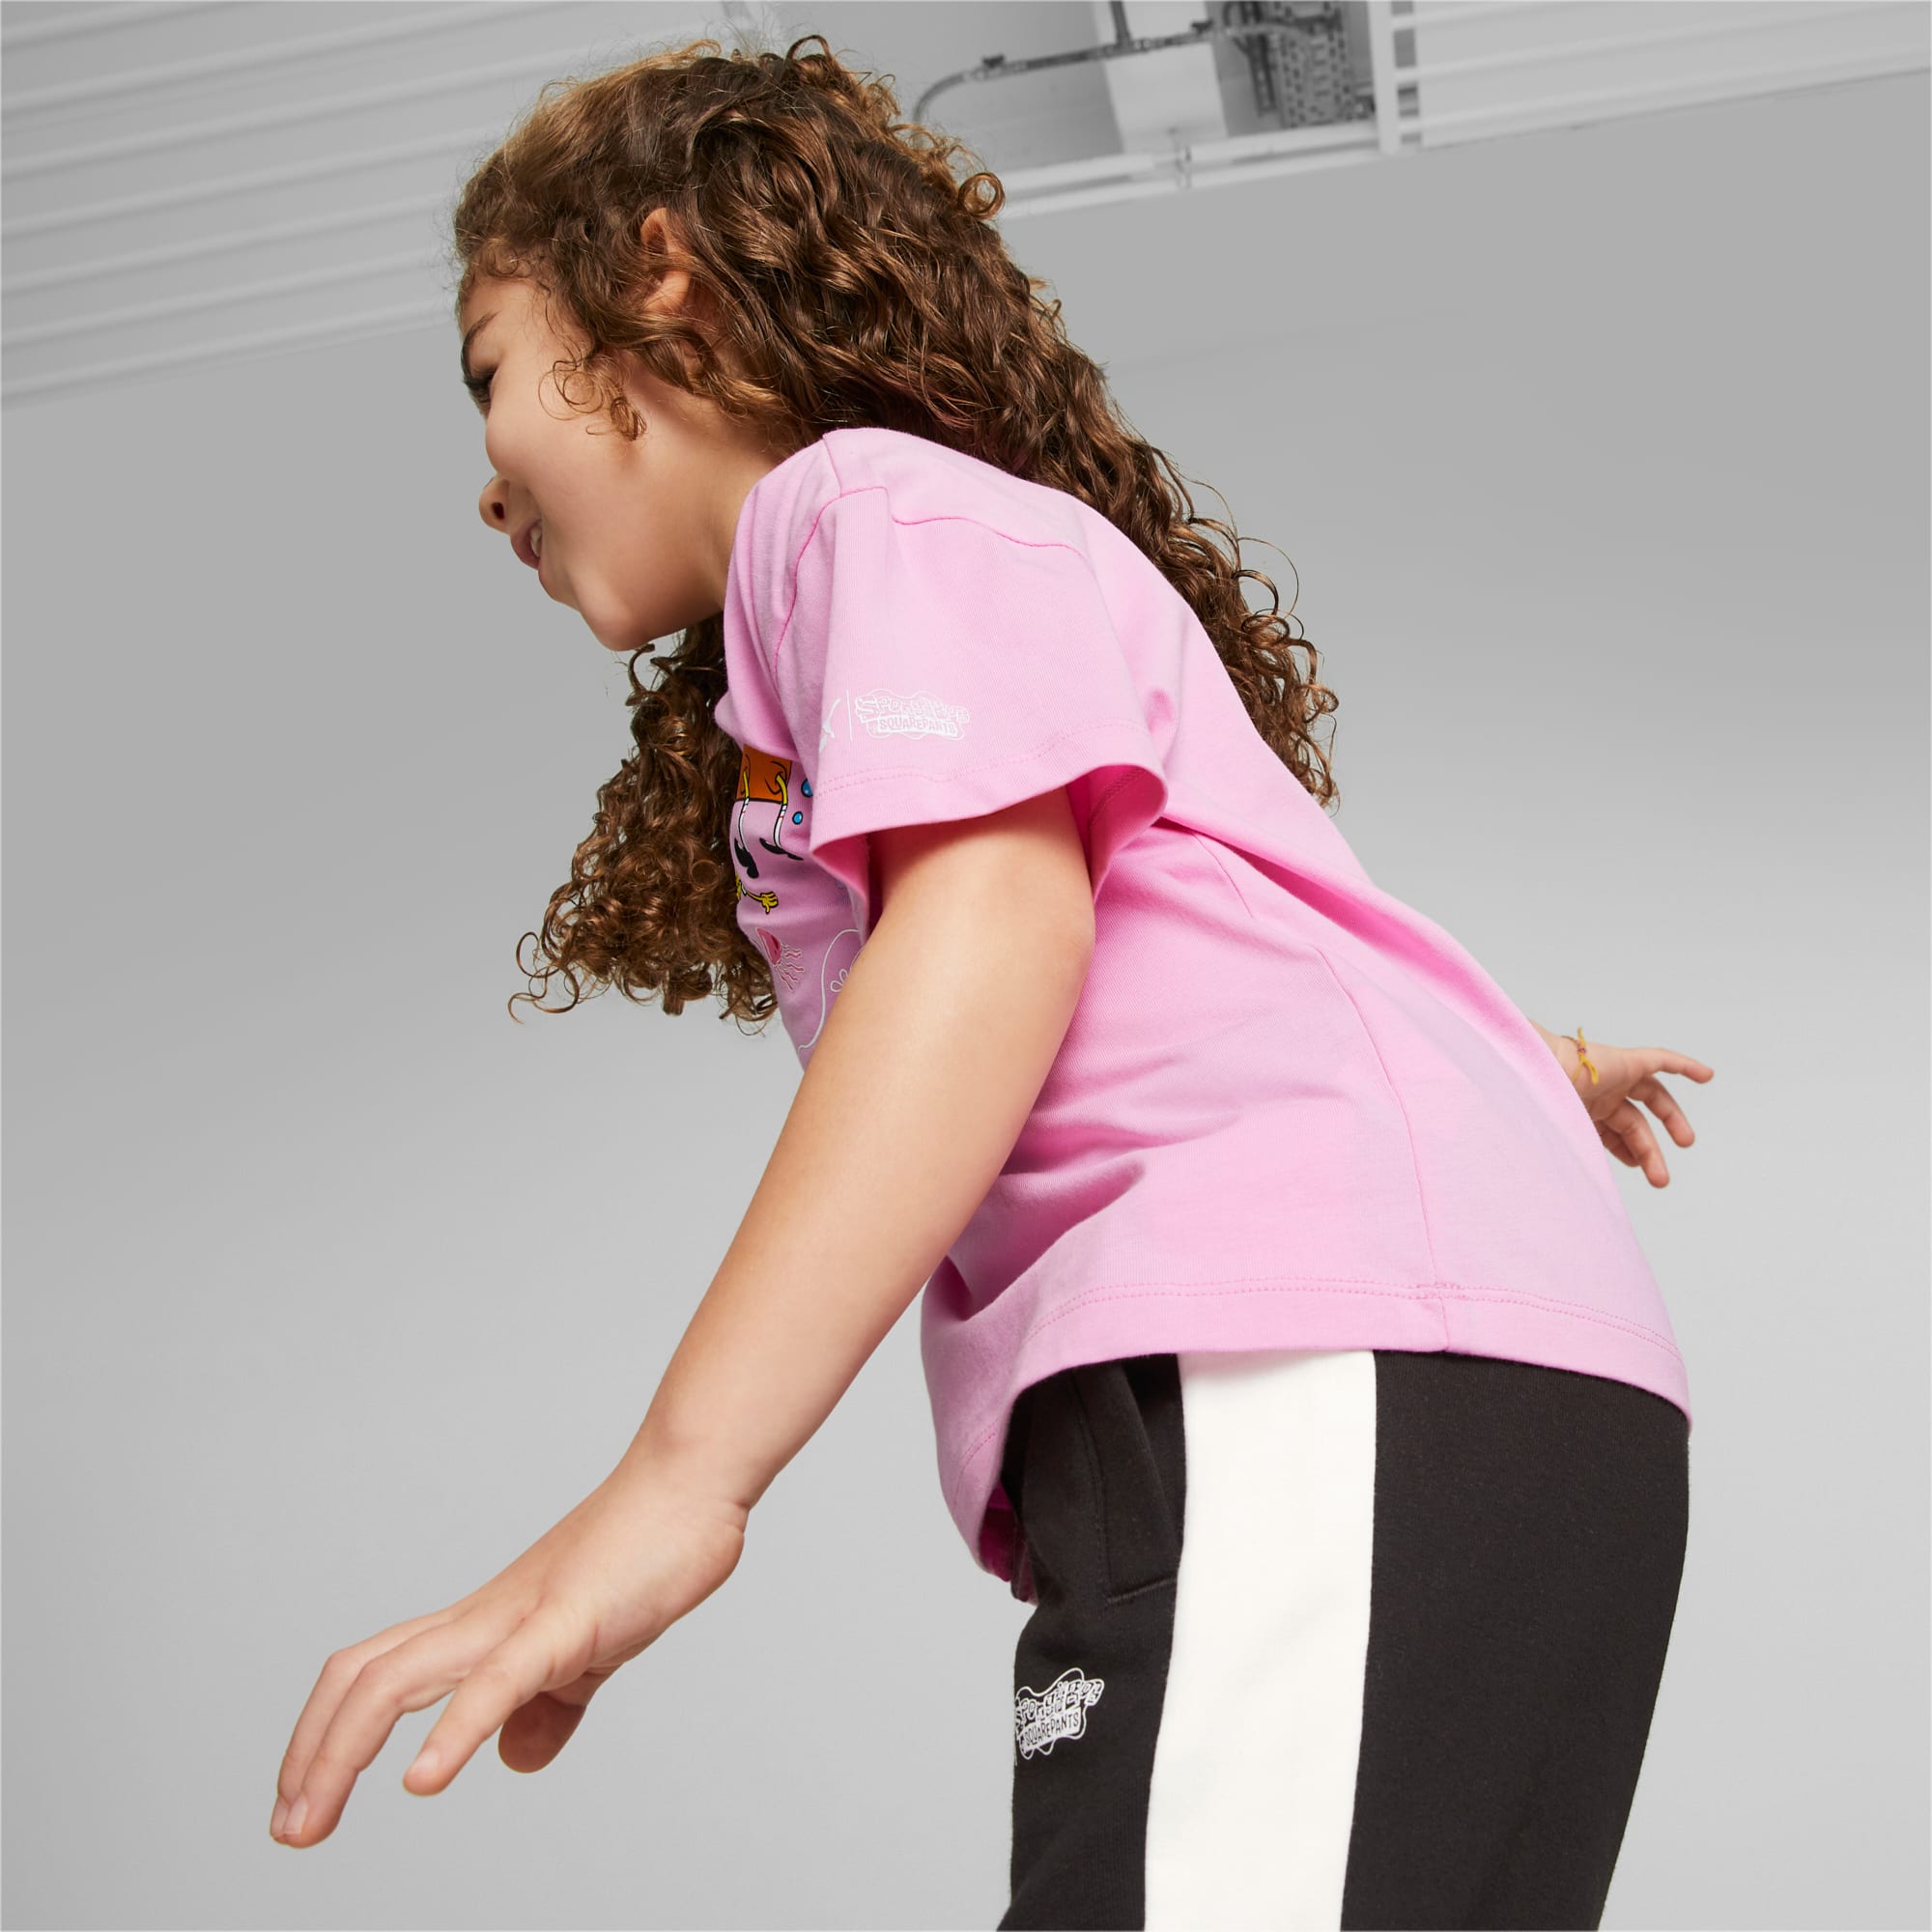 PUMA X SPONGEBOB T-Shirt Kinder, Rosa, Größe: 140, Kleidung